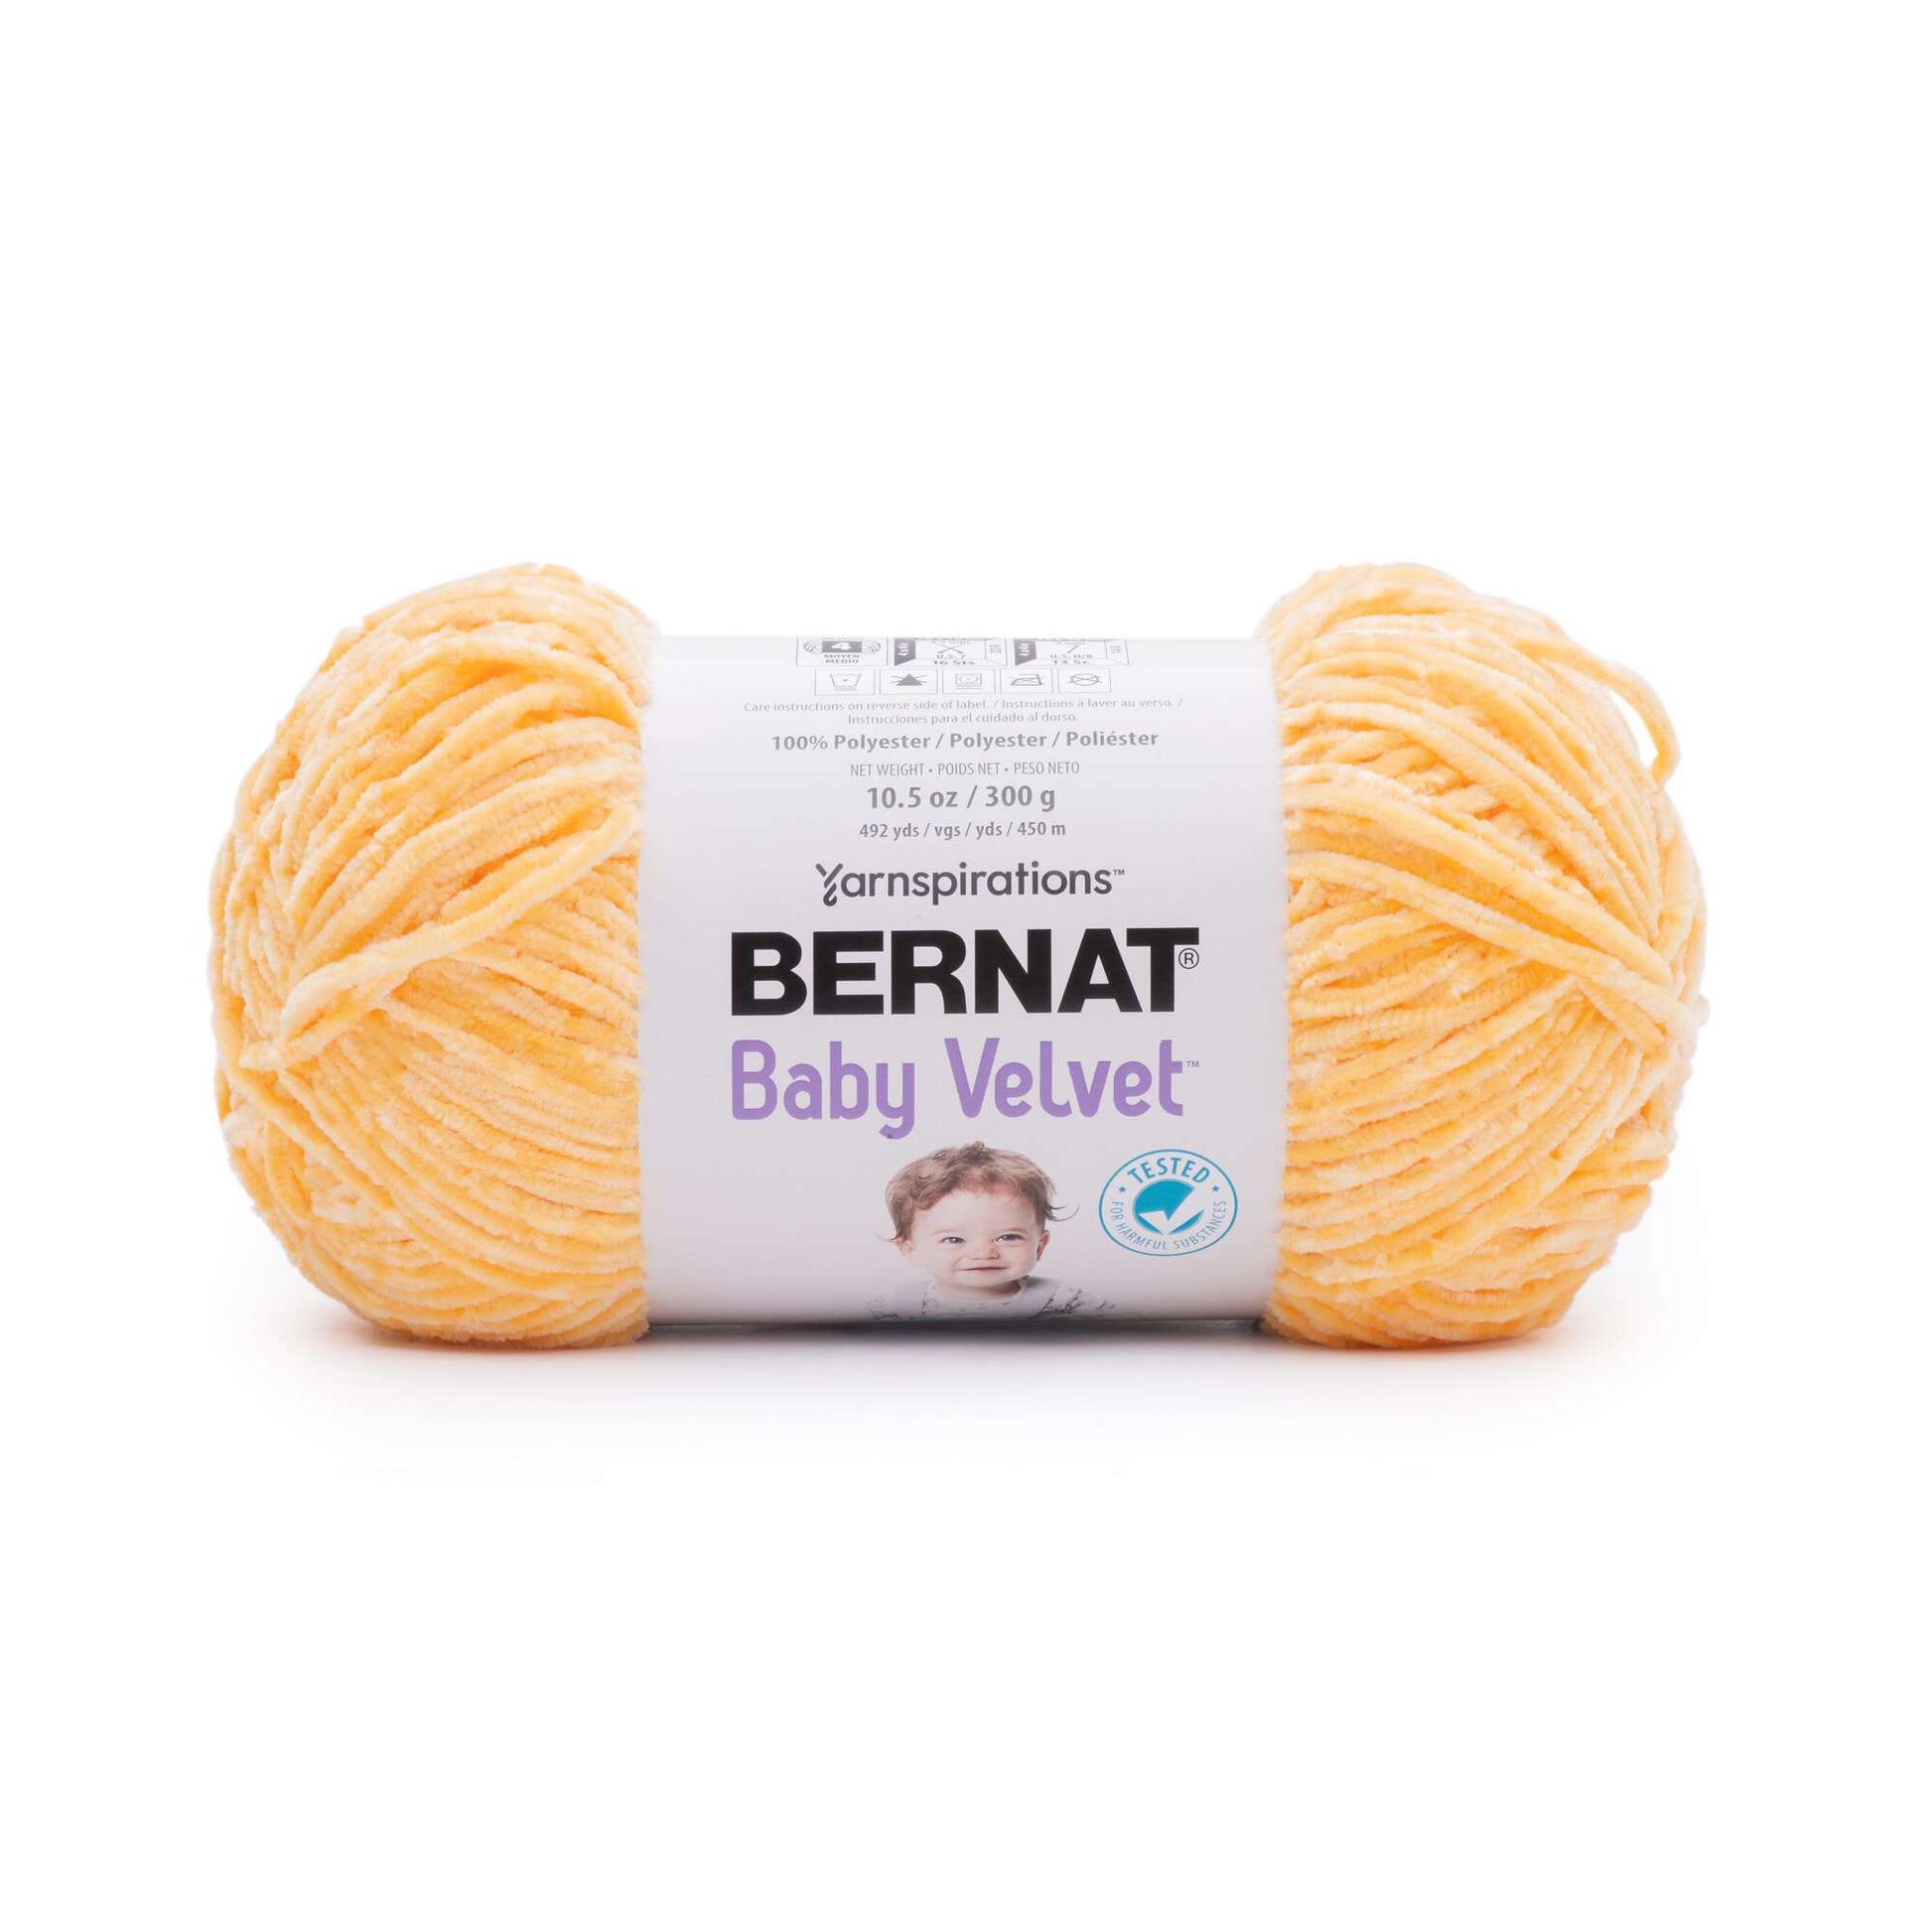 Bernat Baby Velvet Yarn (300g/10.5oz) Snapdragon Yellow